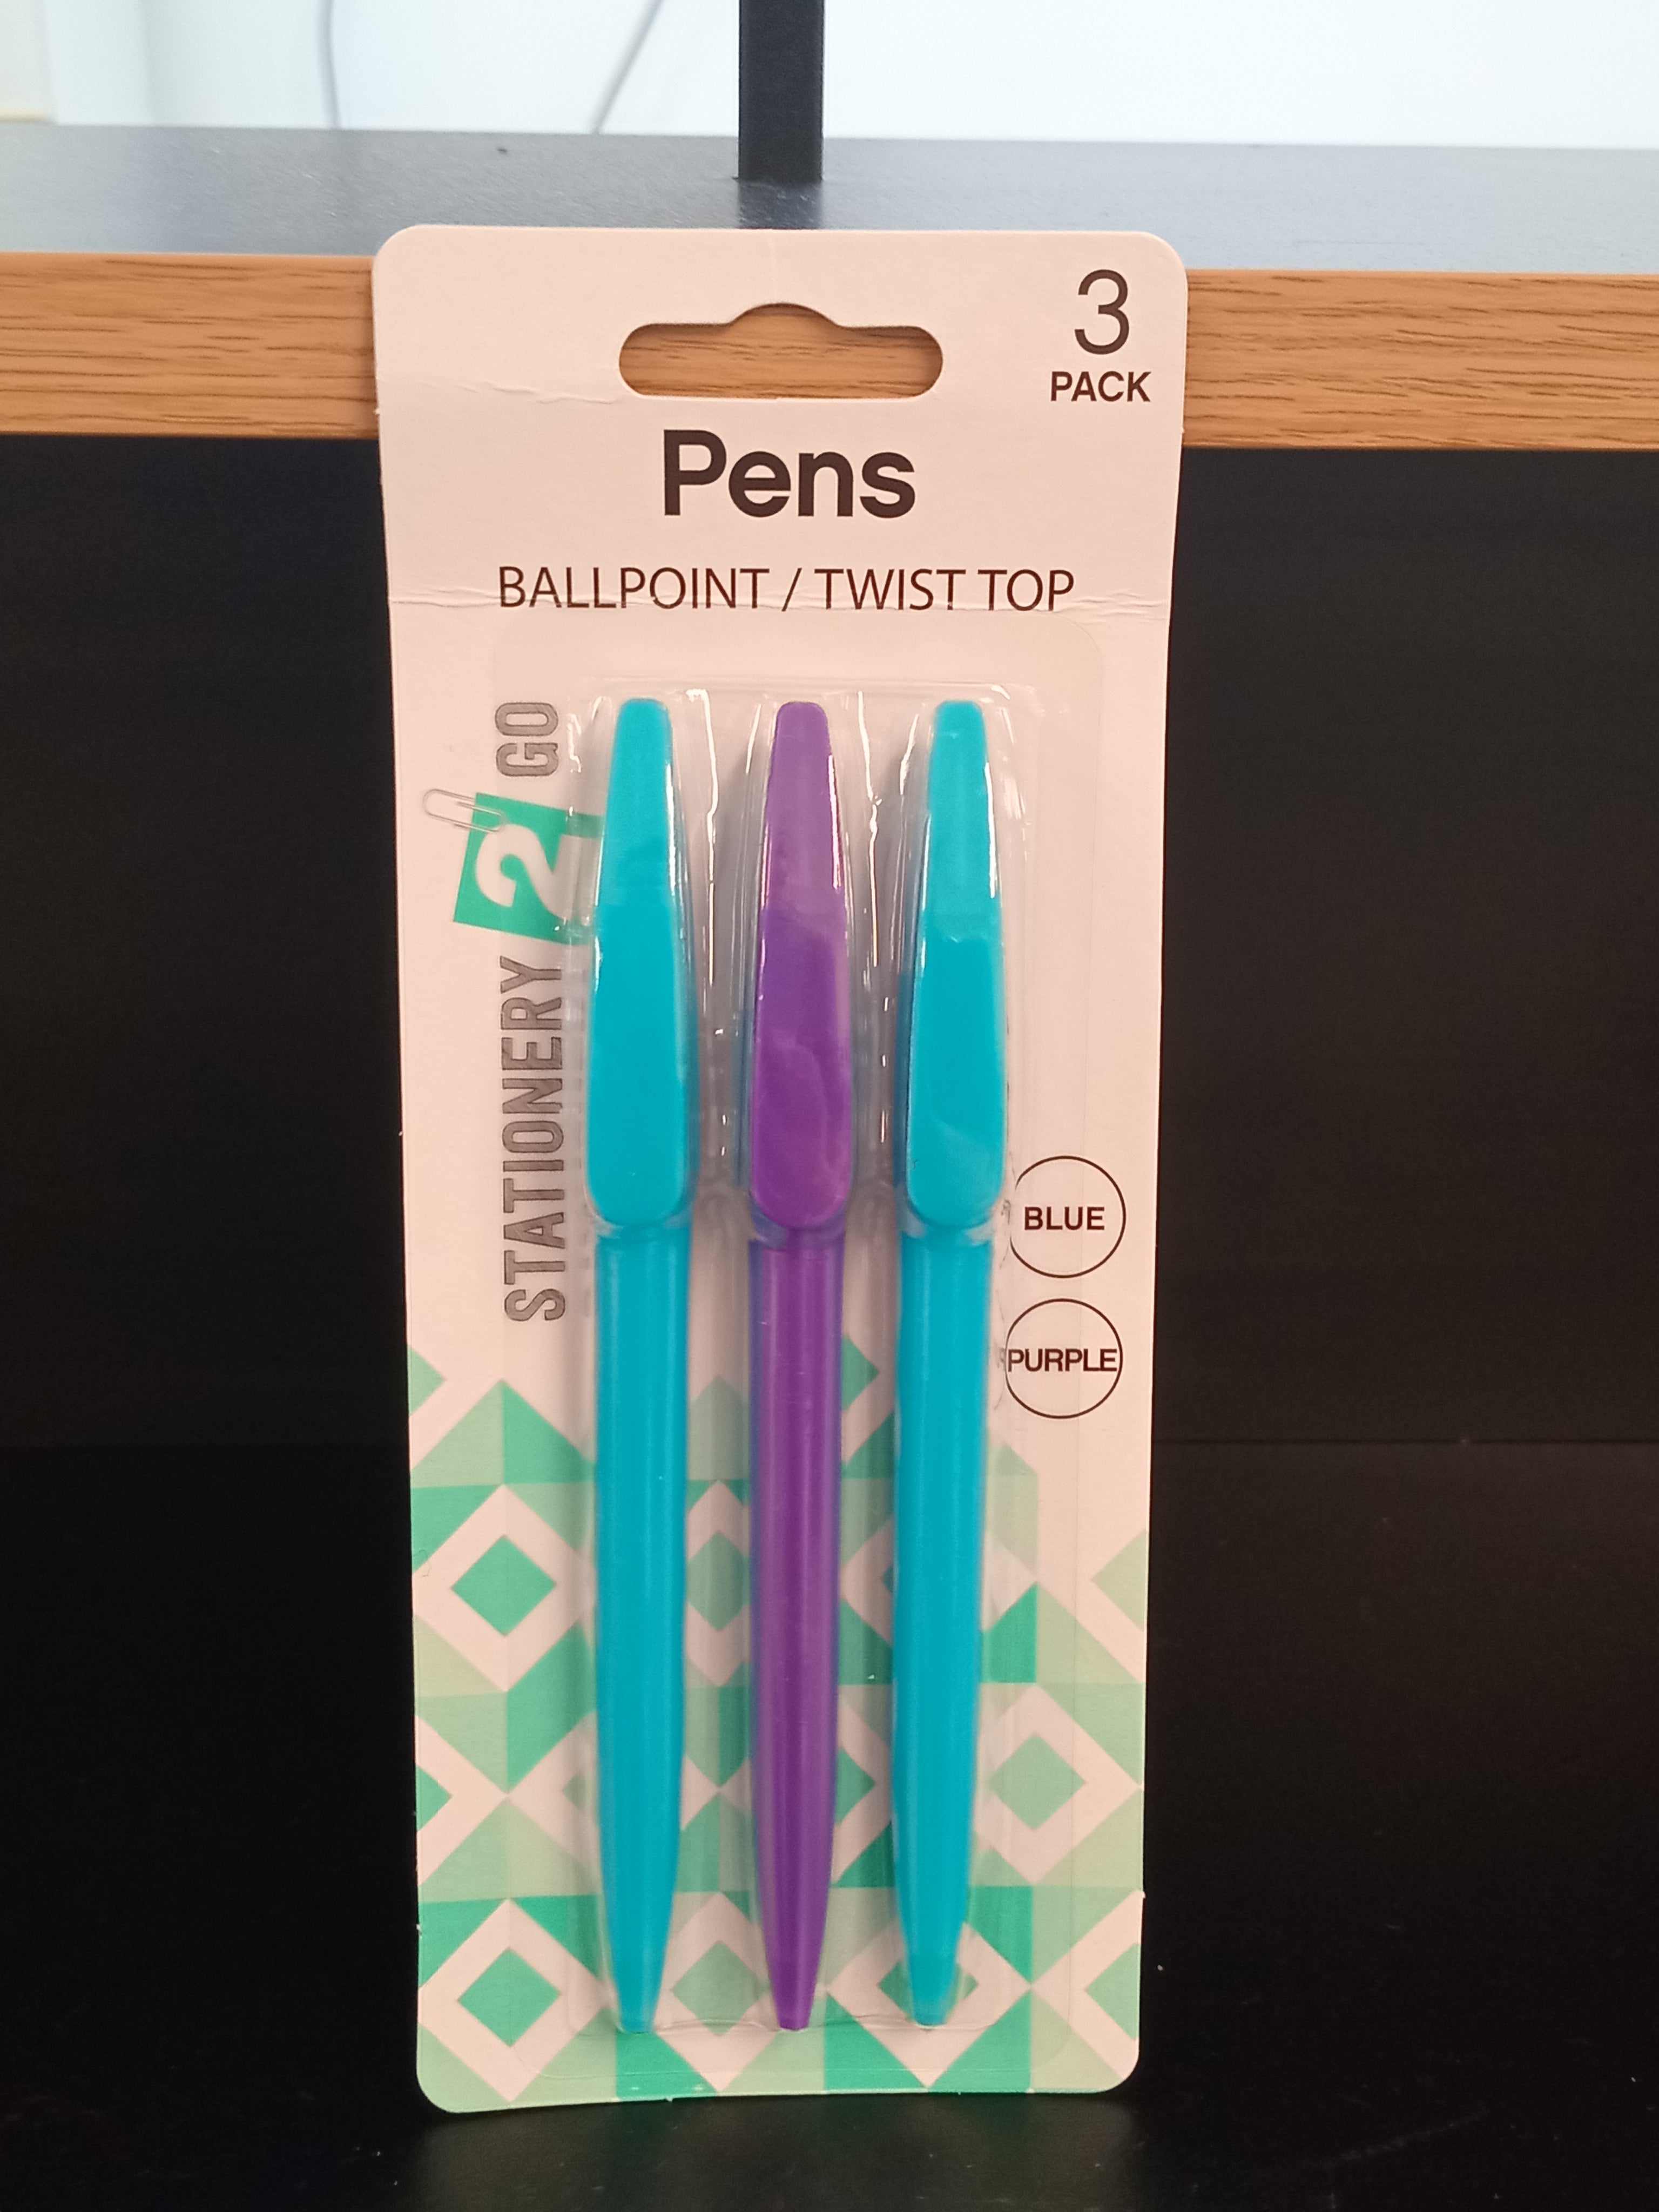 Ballpoint/Twist top pens